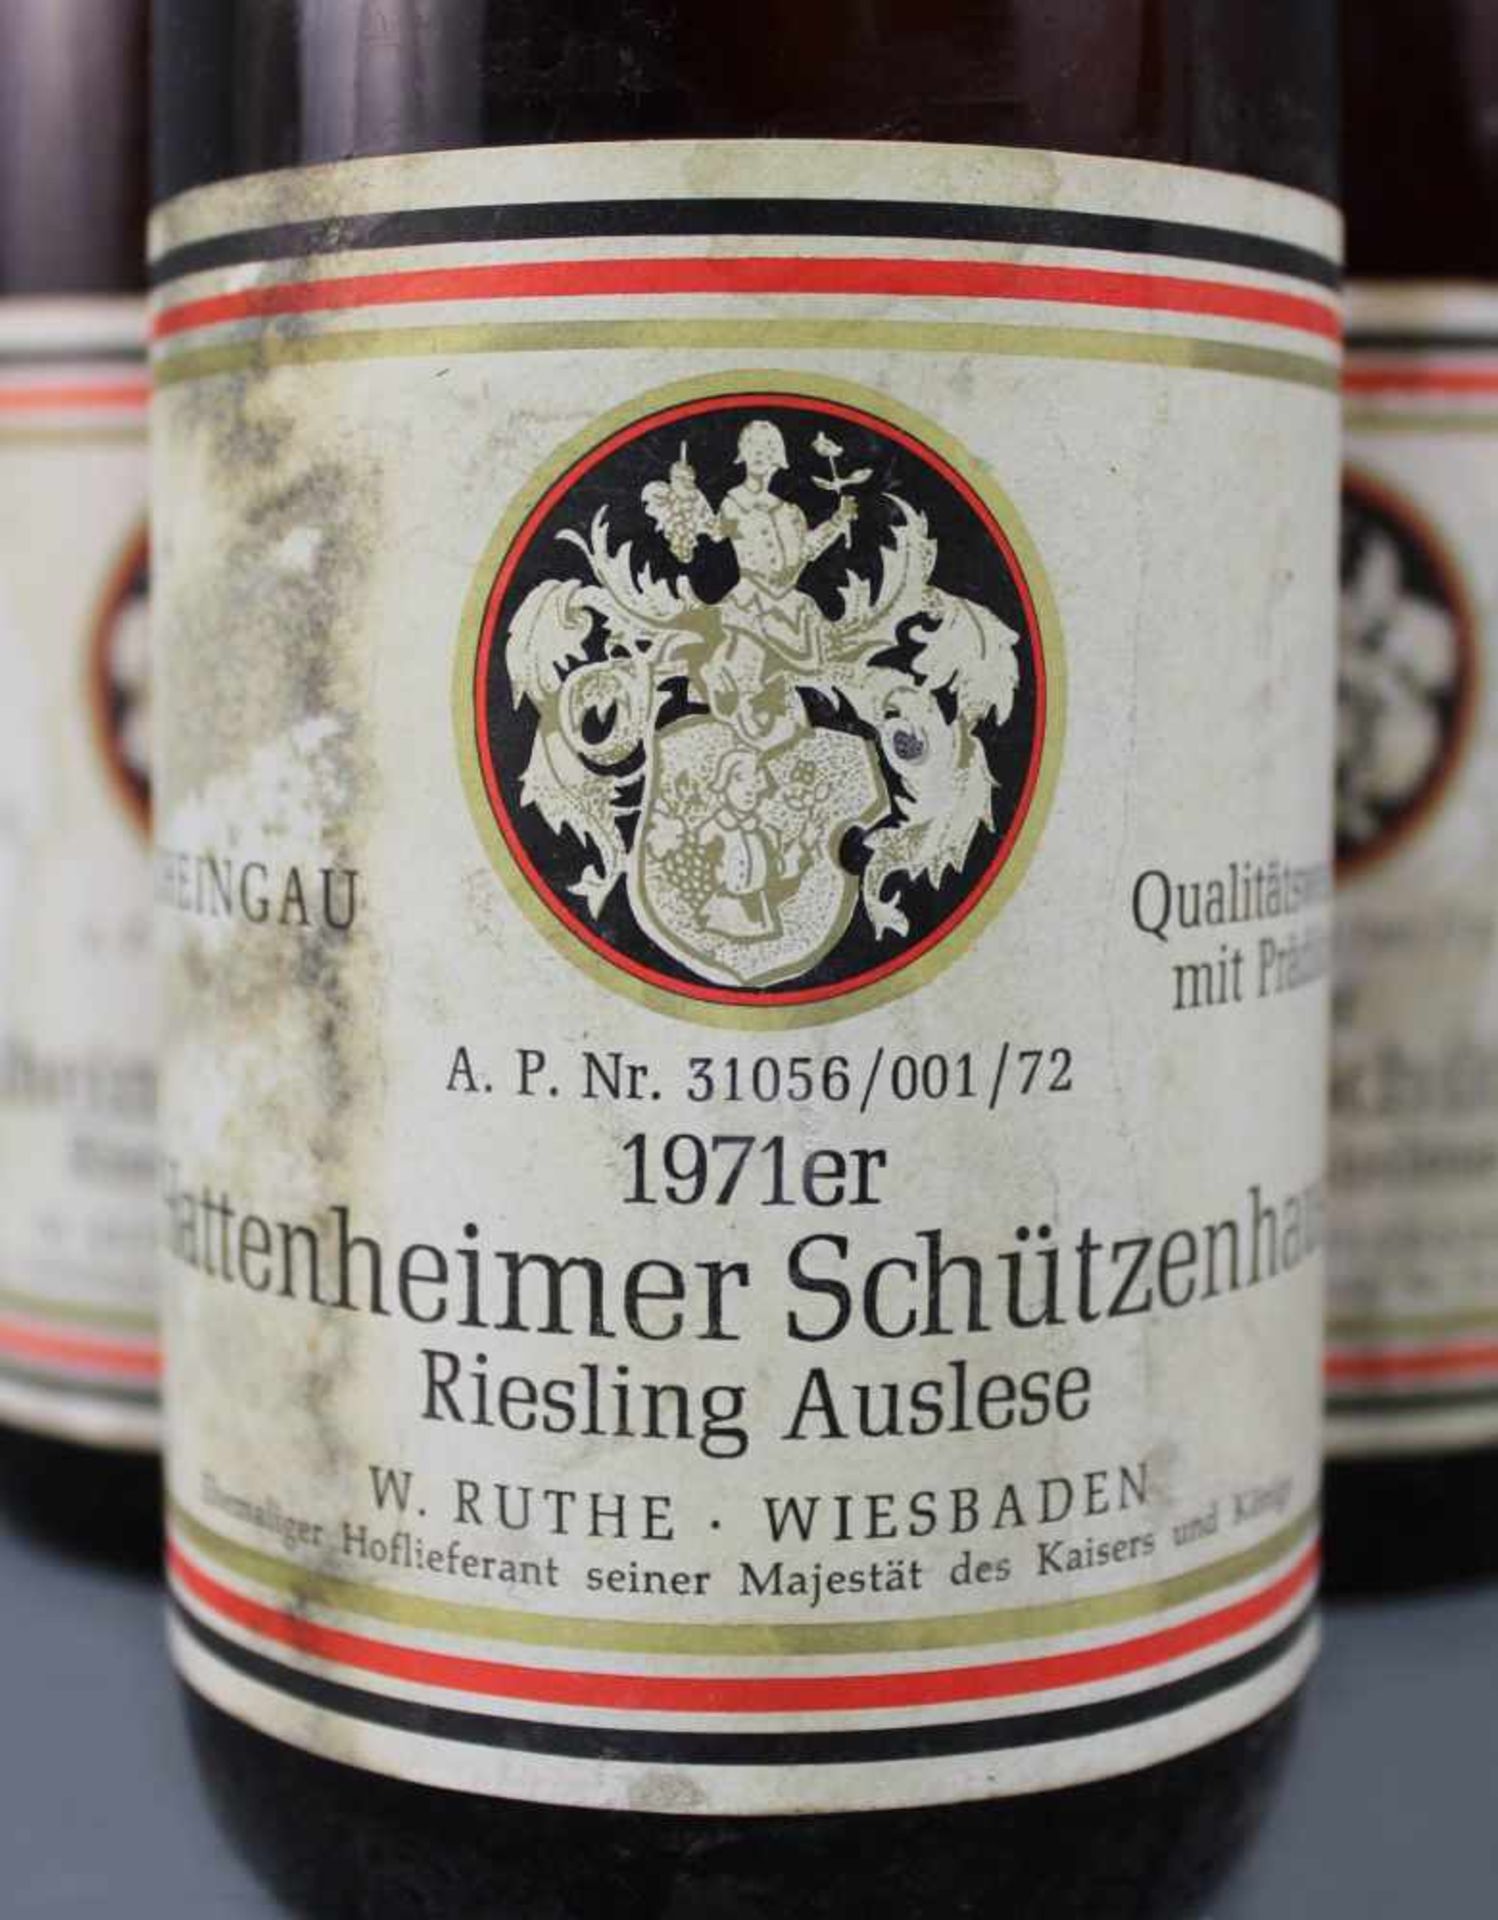 1971 Hattenheimer Schützenhaus Riesling Auslese. 3 ganze Flaschen.Weingut W. Ruthe. Ehemaliger - Image 2 of 6